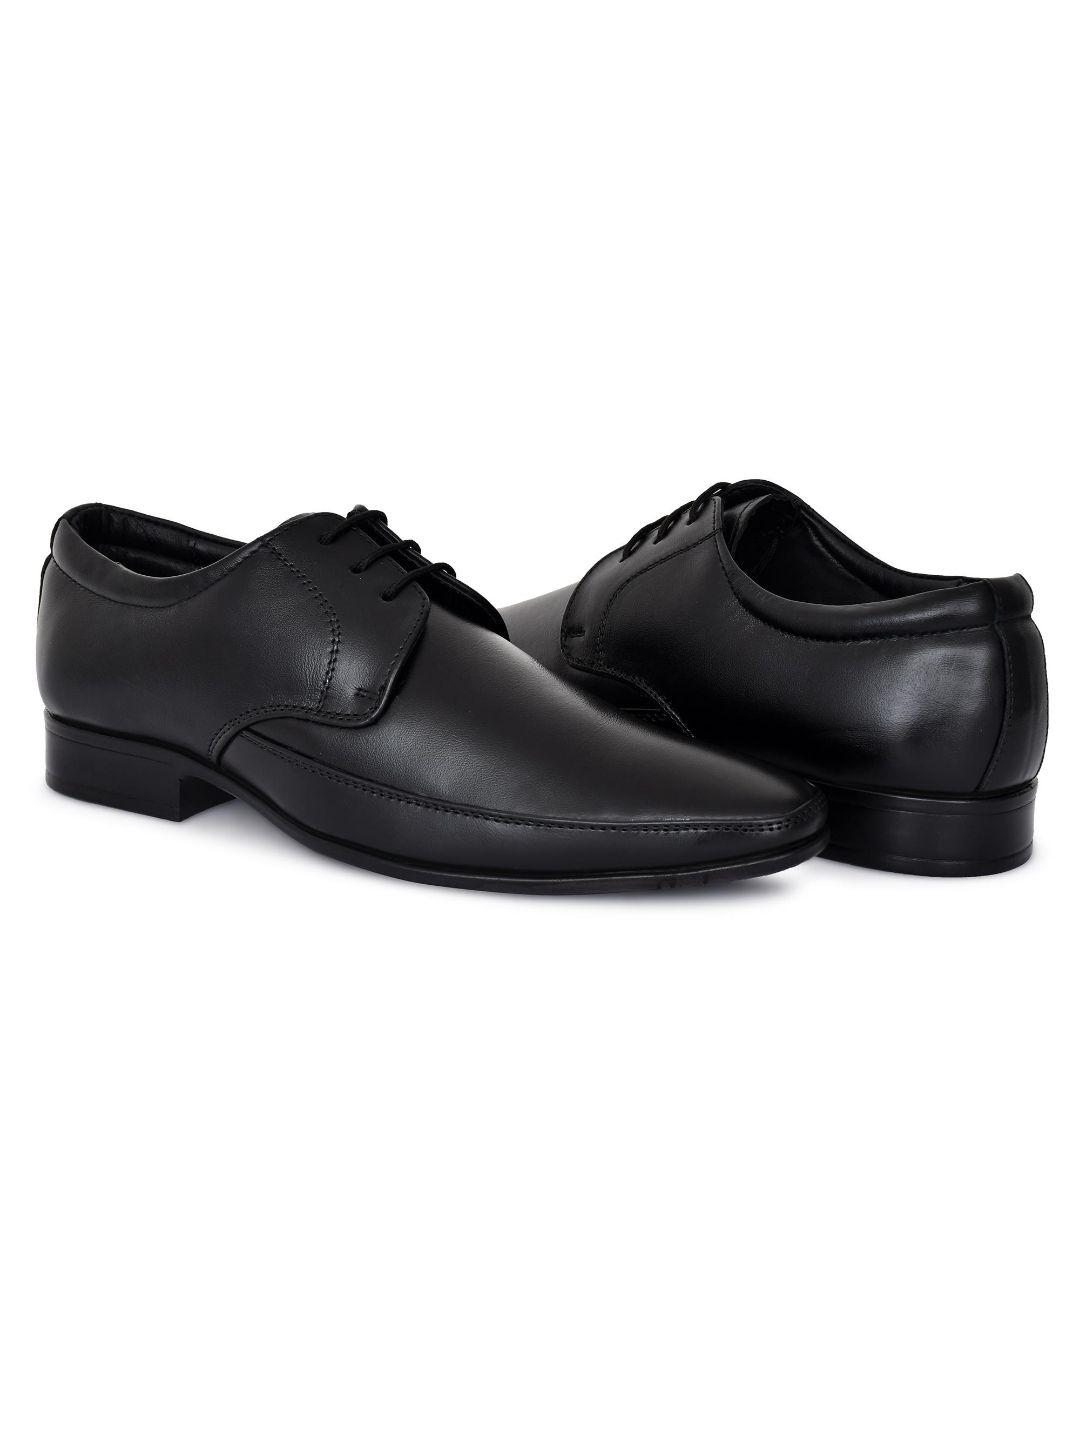 MAEVE & SHELBY Mens Geniune Leather Formal Derby Stylish Designer Shoes for Men